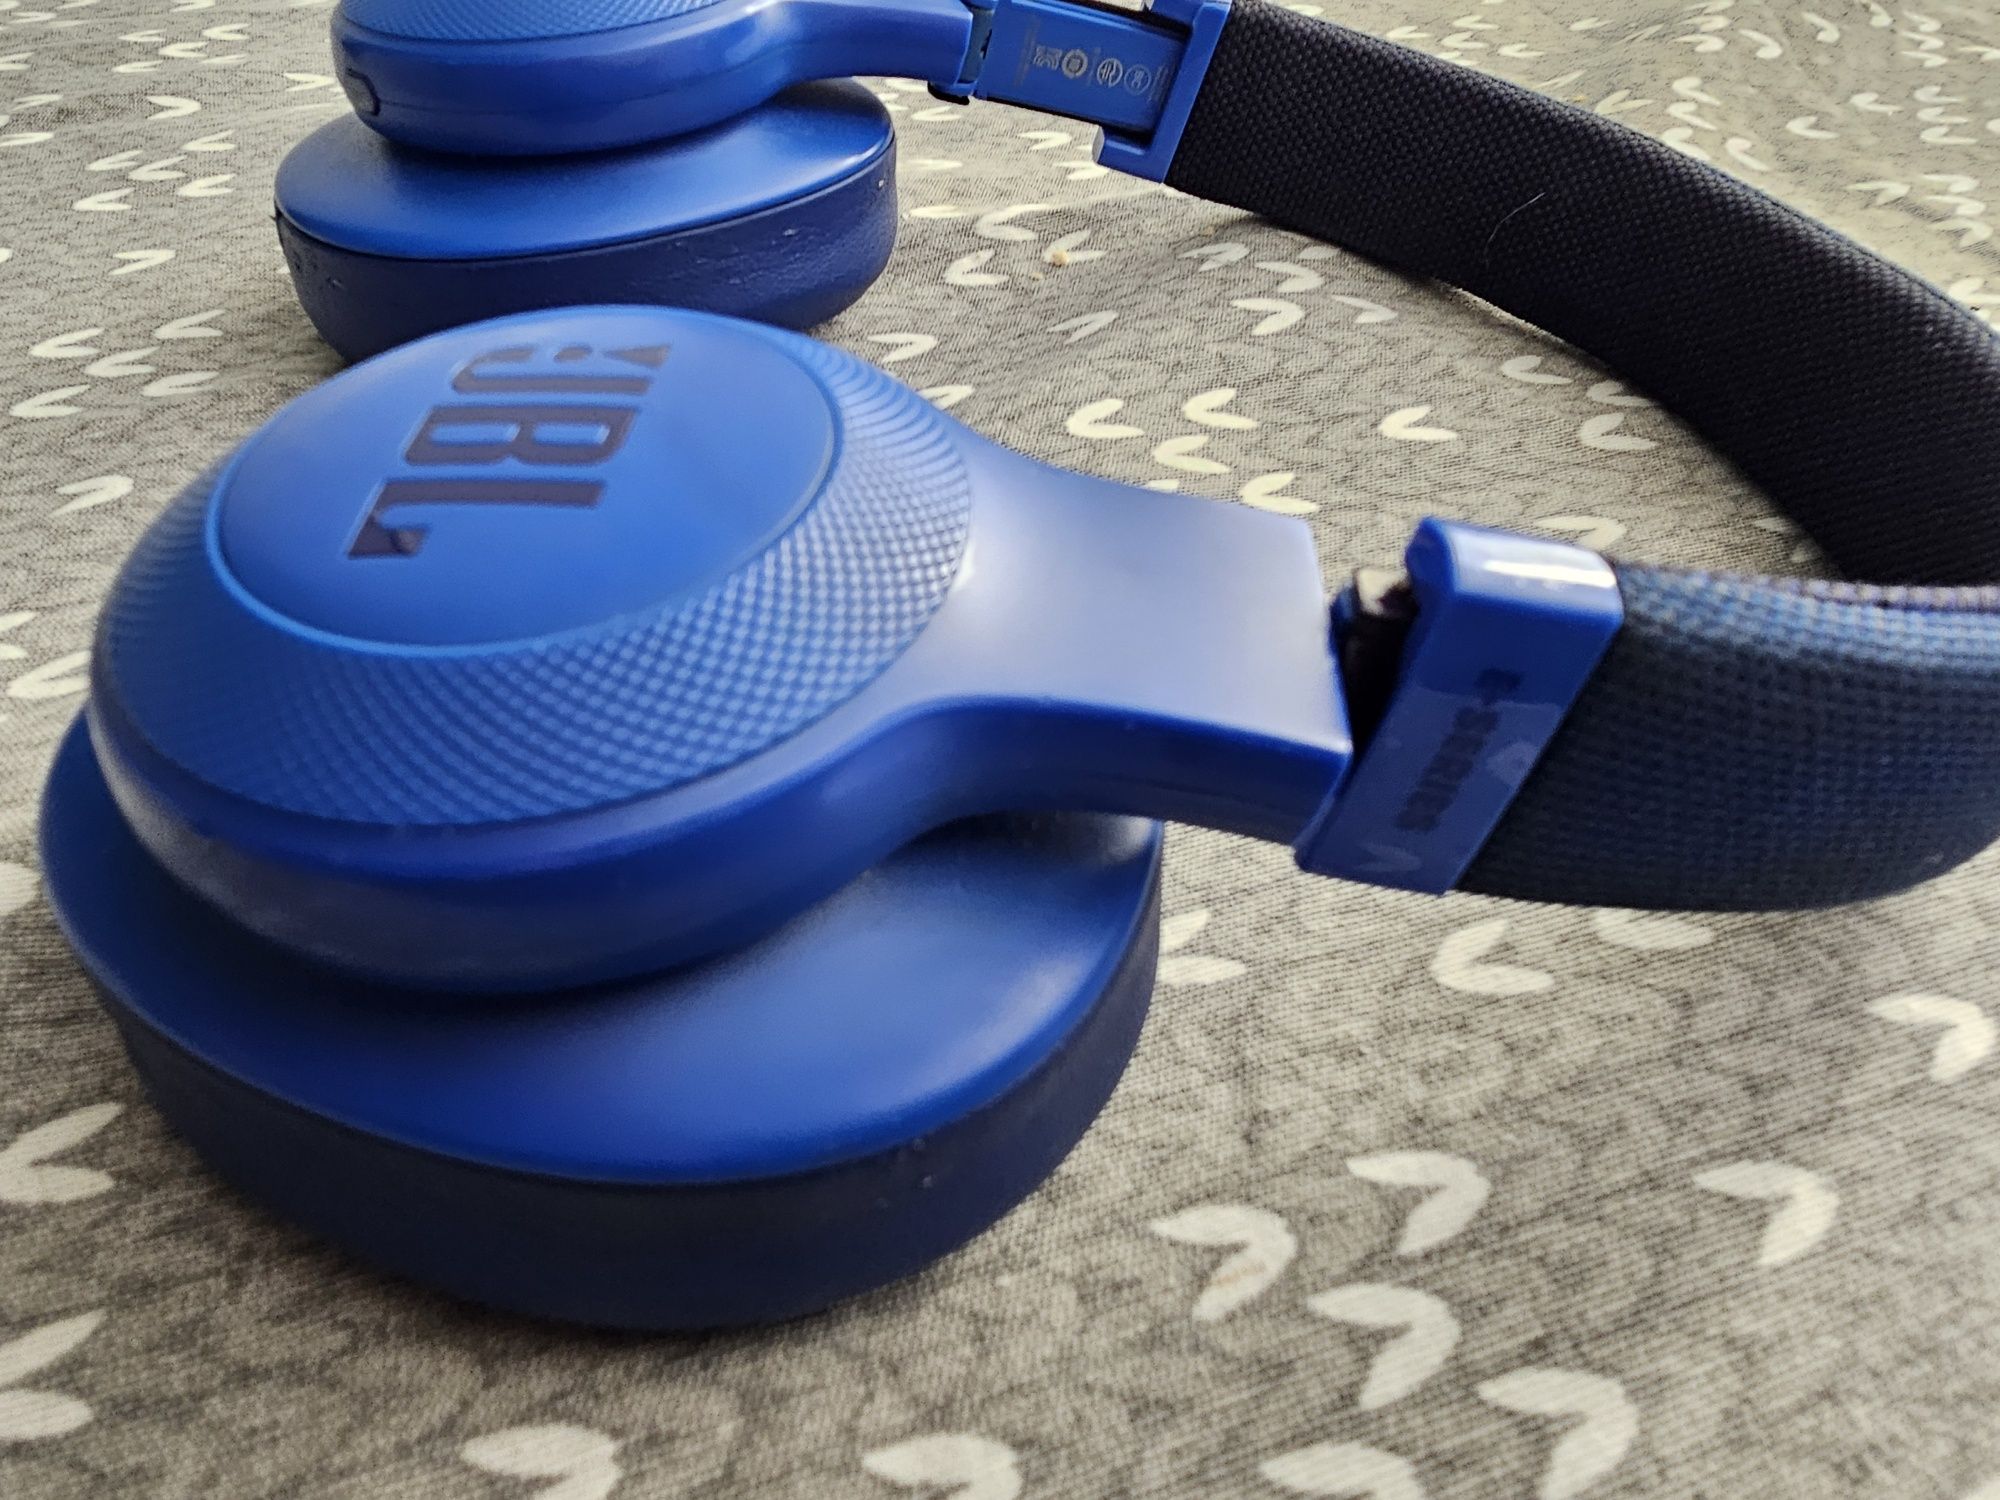 Jbl słuchawki bezprzewodowe Bluetooth